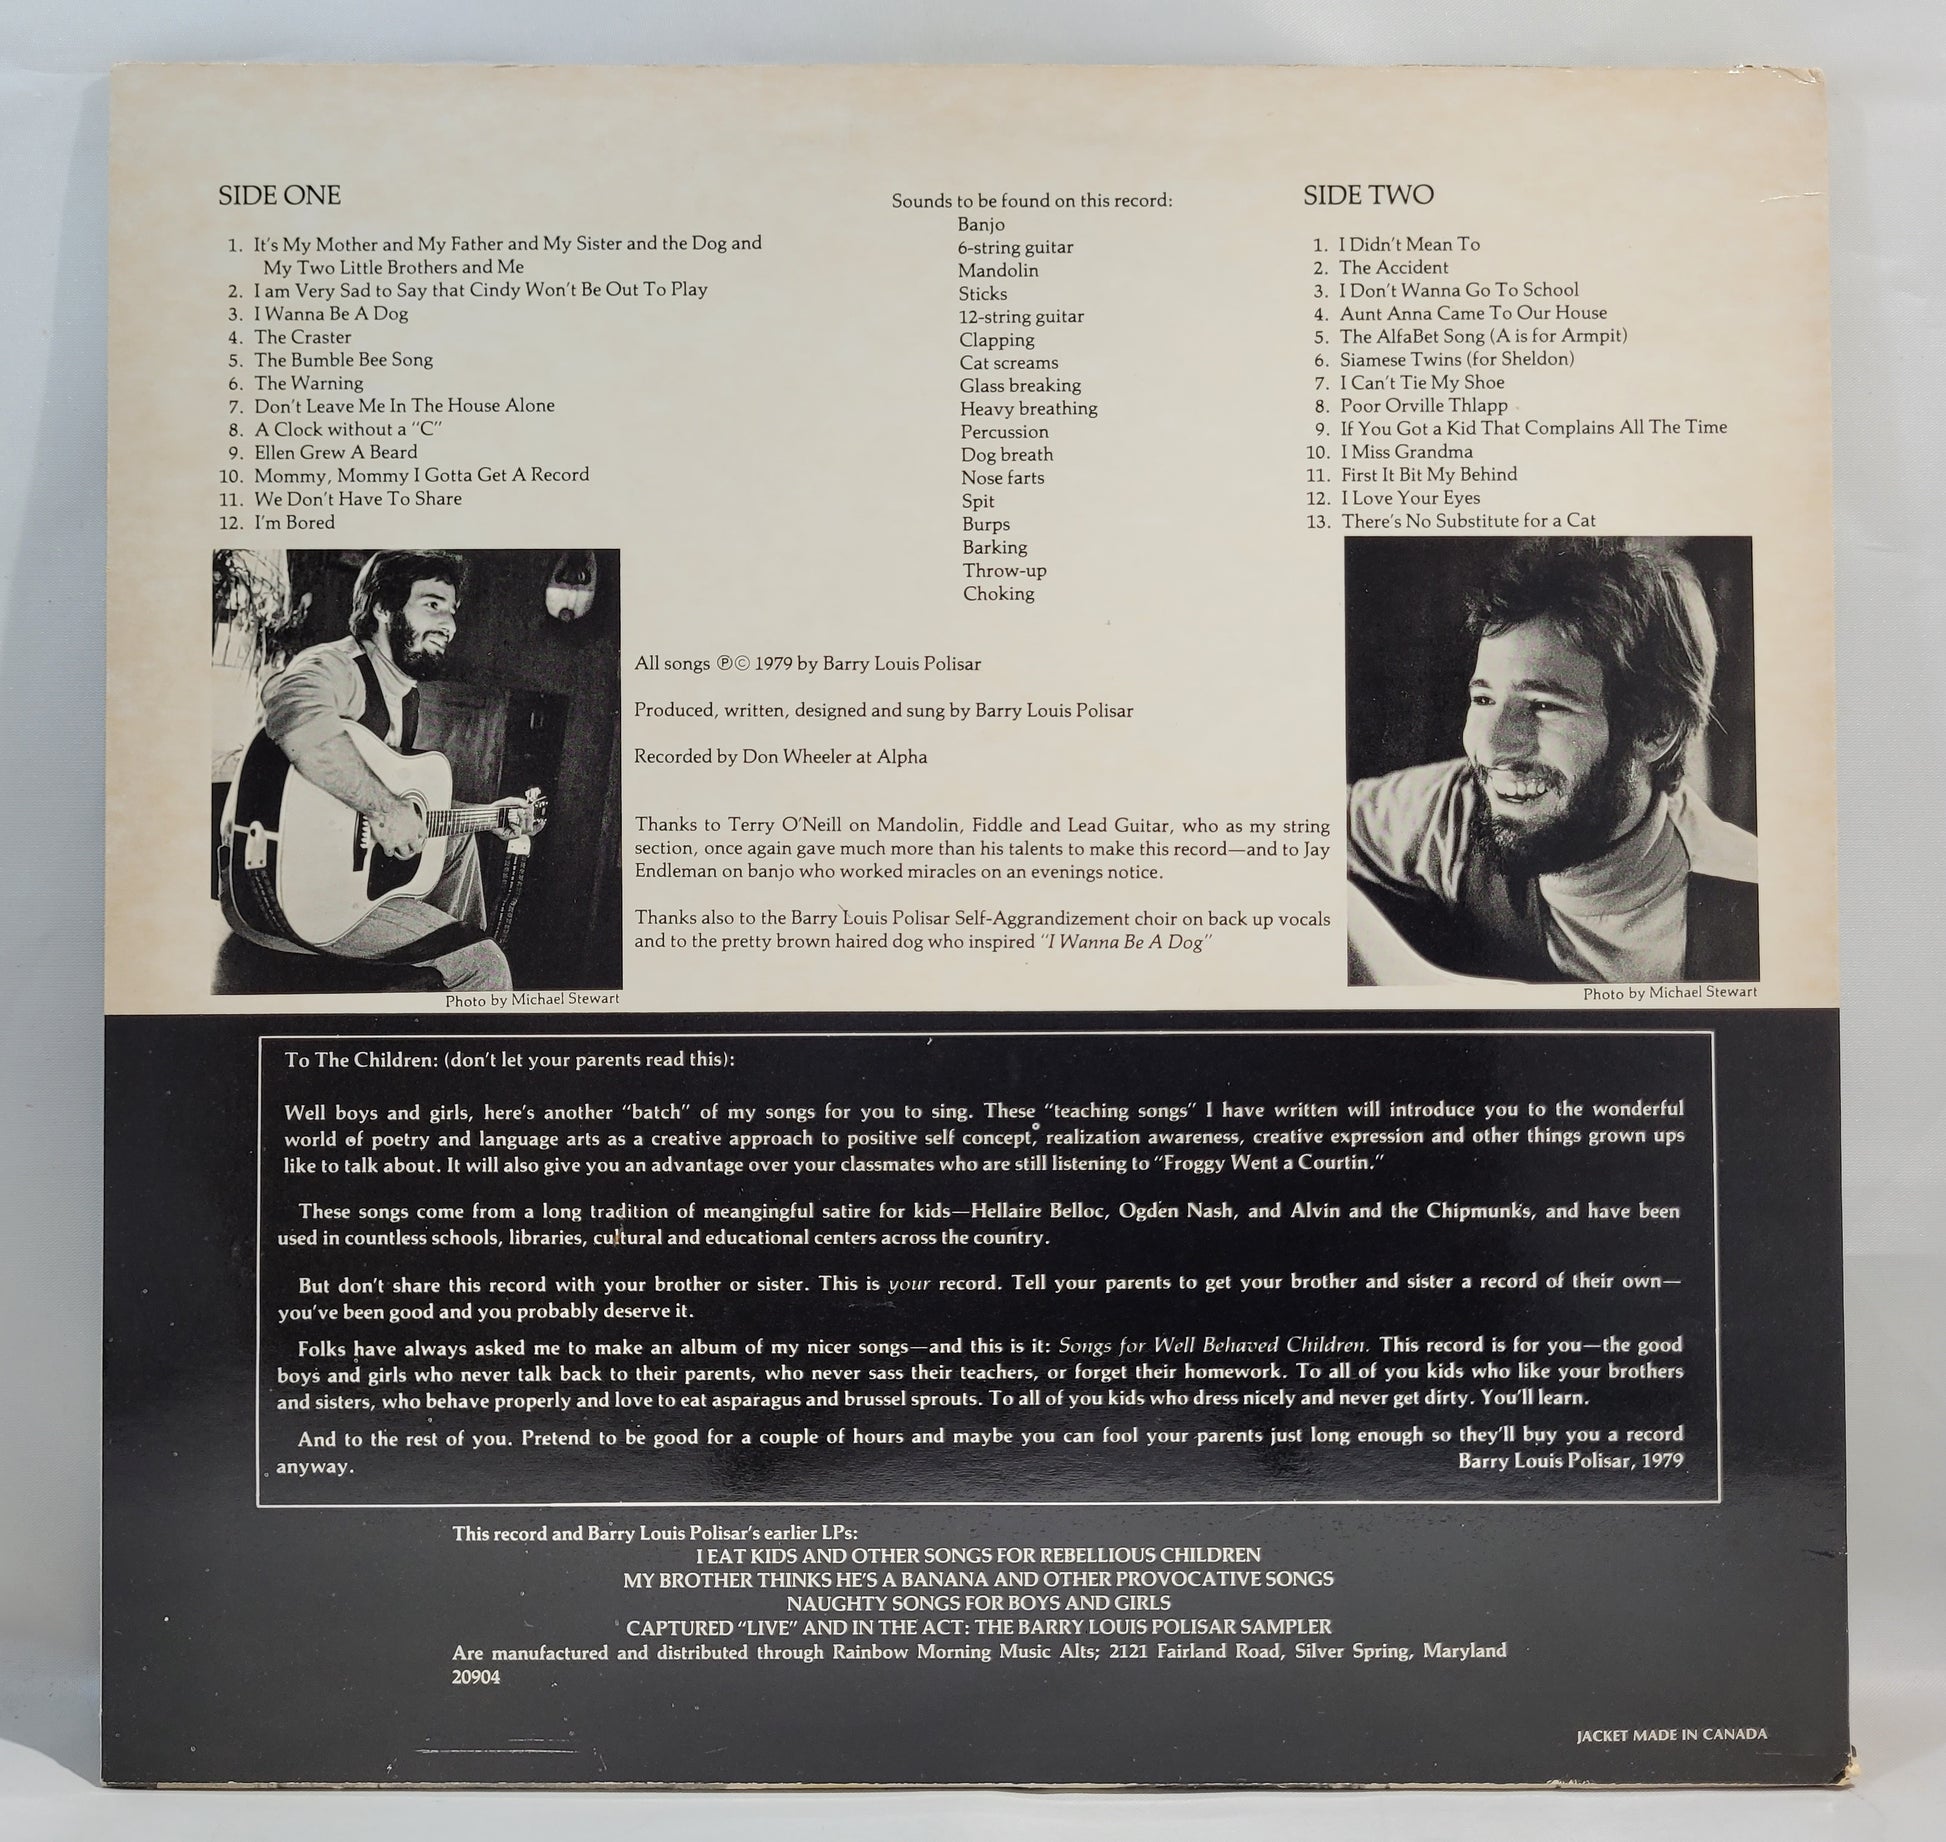 Barry Louis Polisar - Songs for Well Behaved Children [Vinyl Record LP]